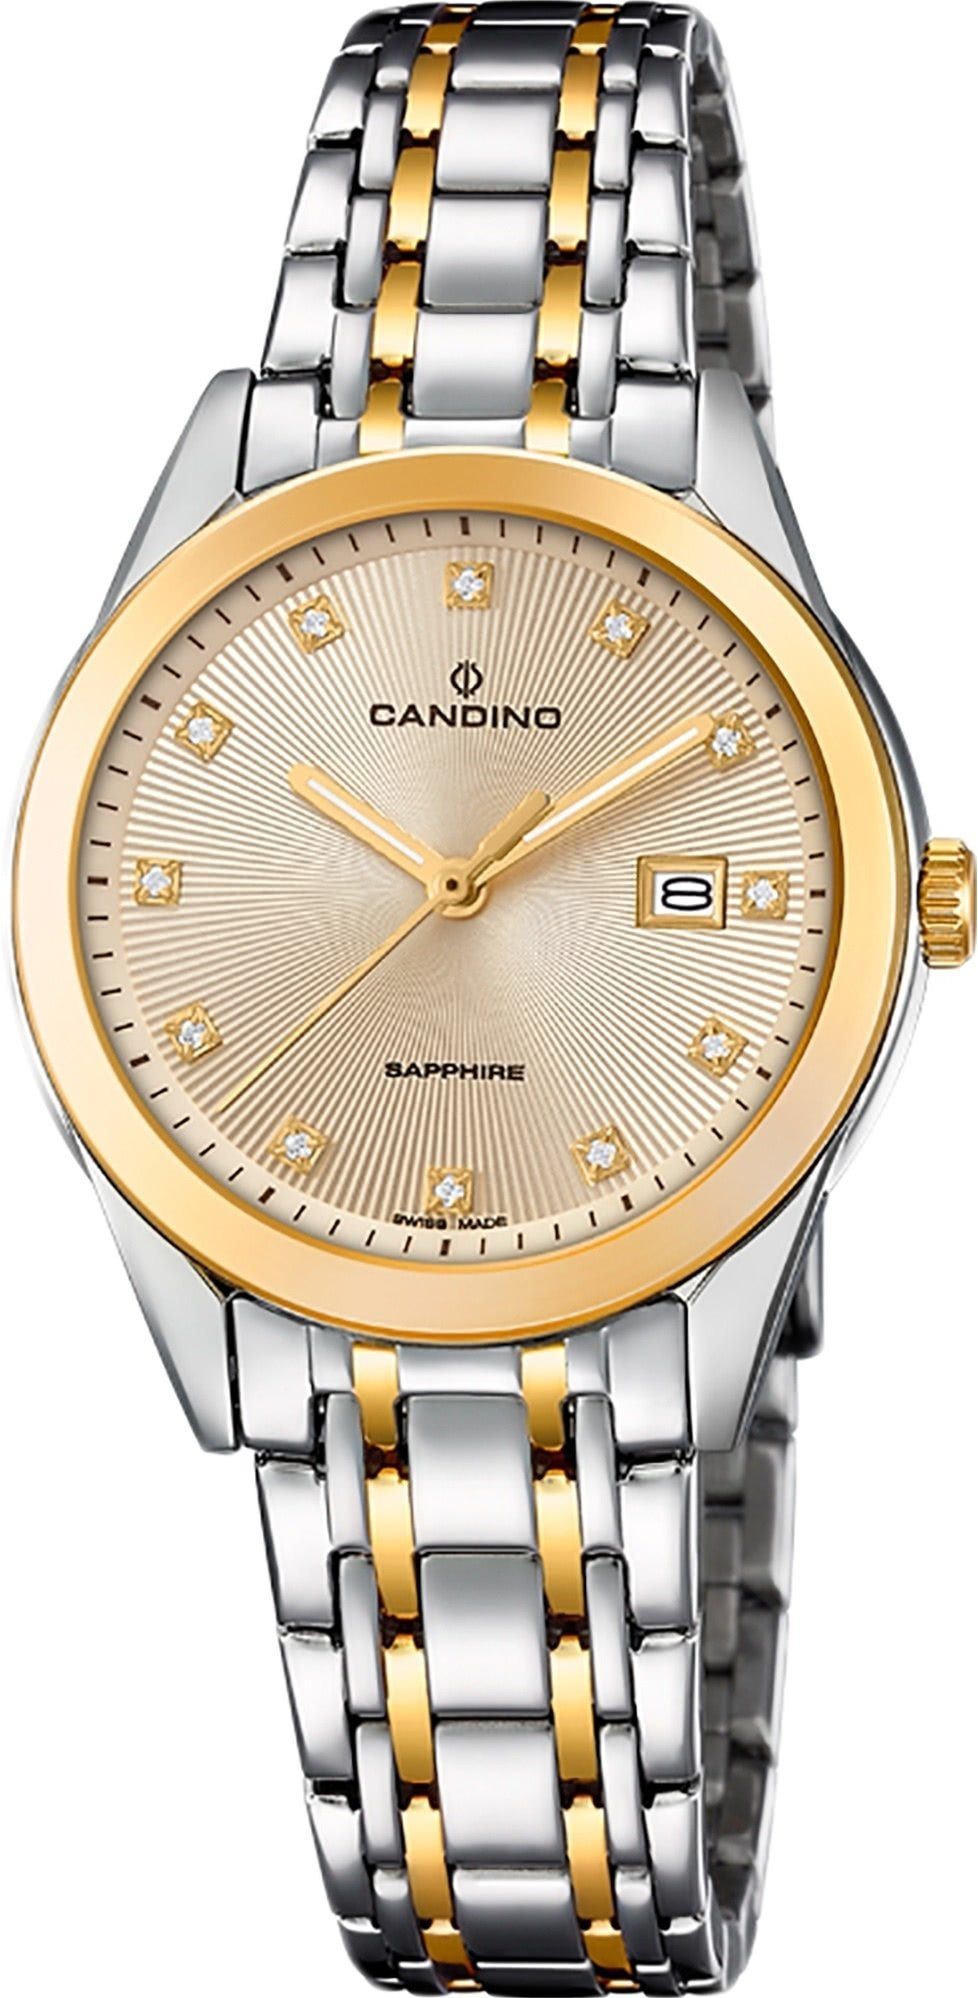 Candino Quarzuhr Candino Damen Uhr Analog C4695/2, Damen Armbanduhr rund, Edelstahlarmband silber, gold, Elegant